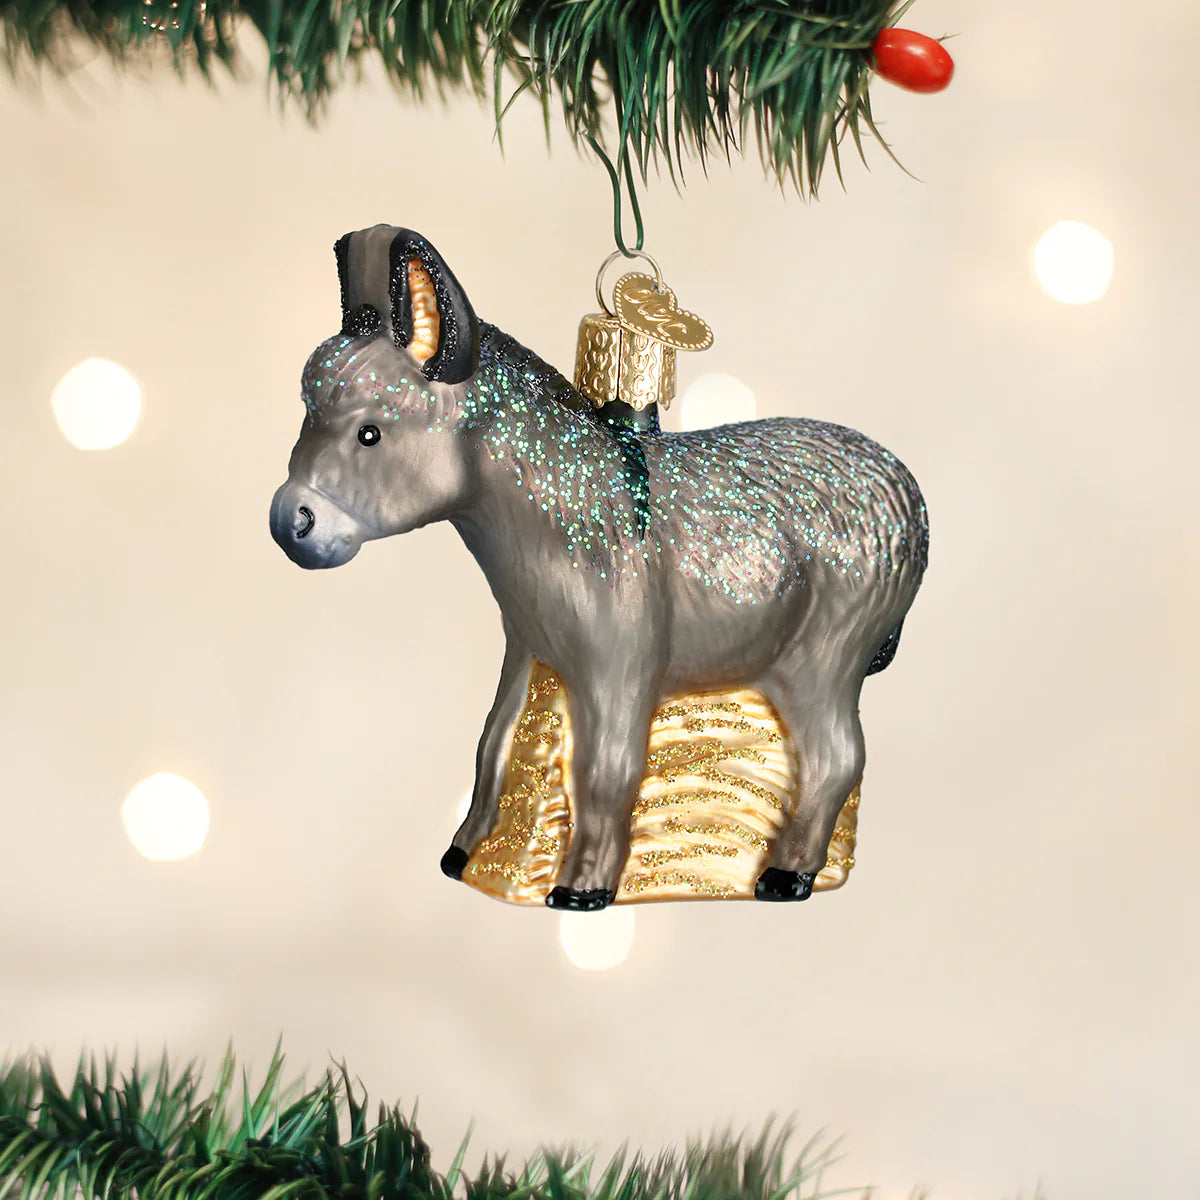 Old World Christmas - Donkey Ornament